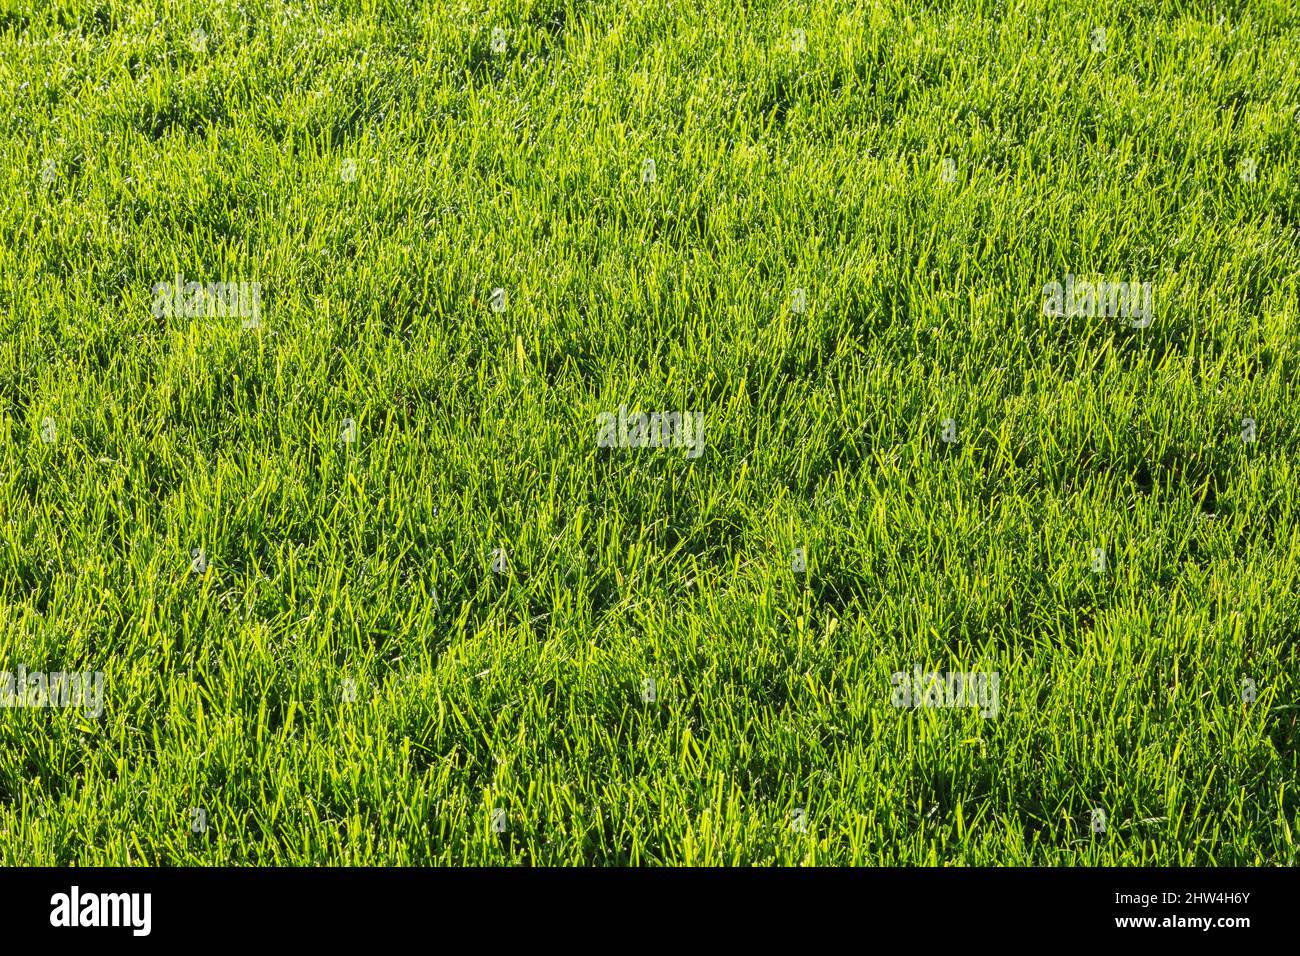 Poa pratensis - Kentucky Bluegrass lawn in backyard in late summer. Stock Photo